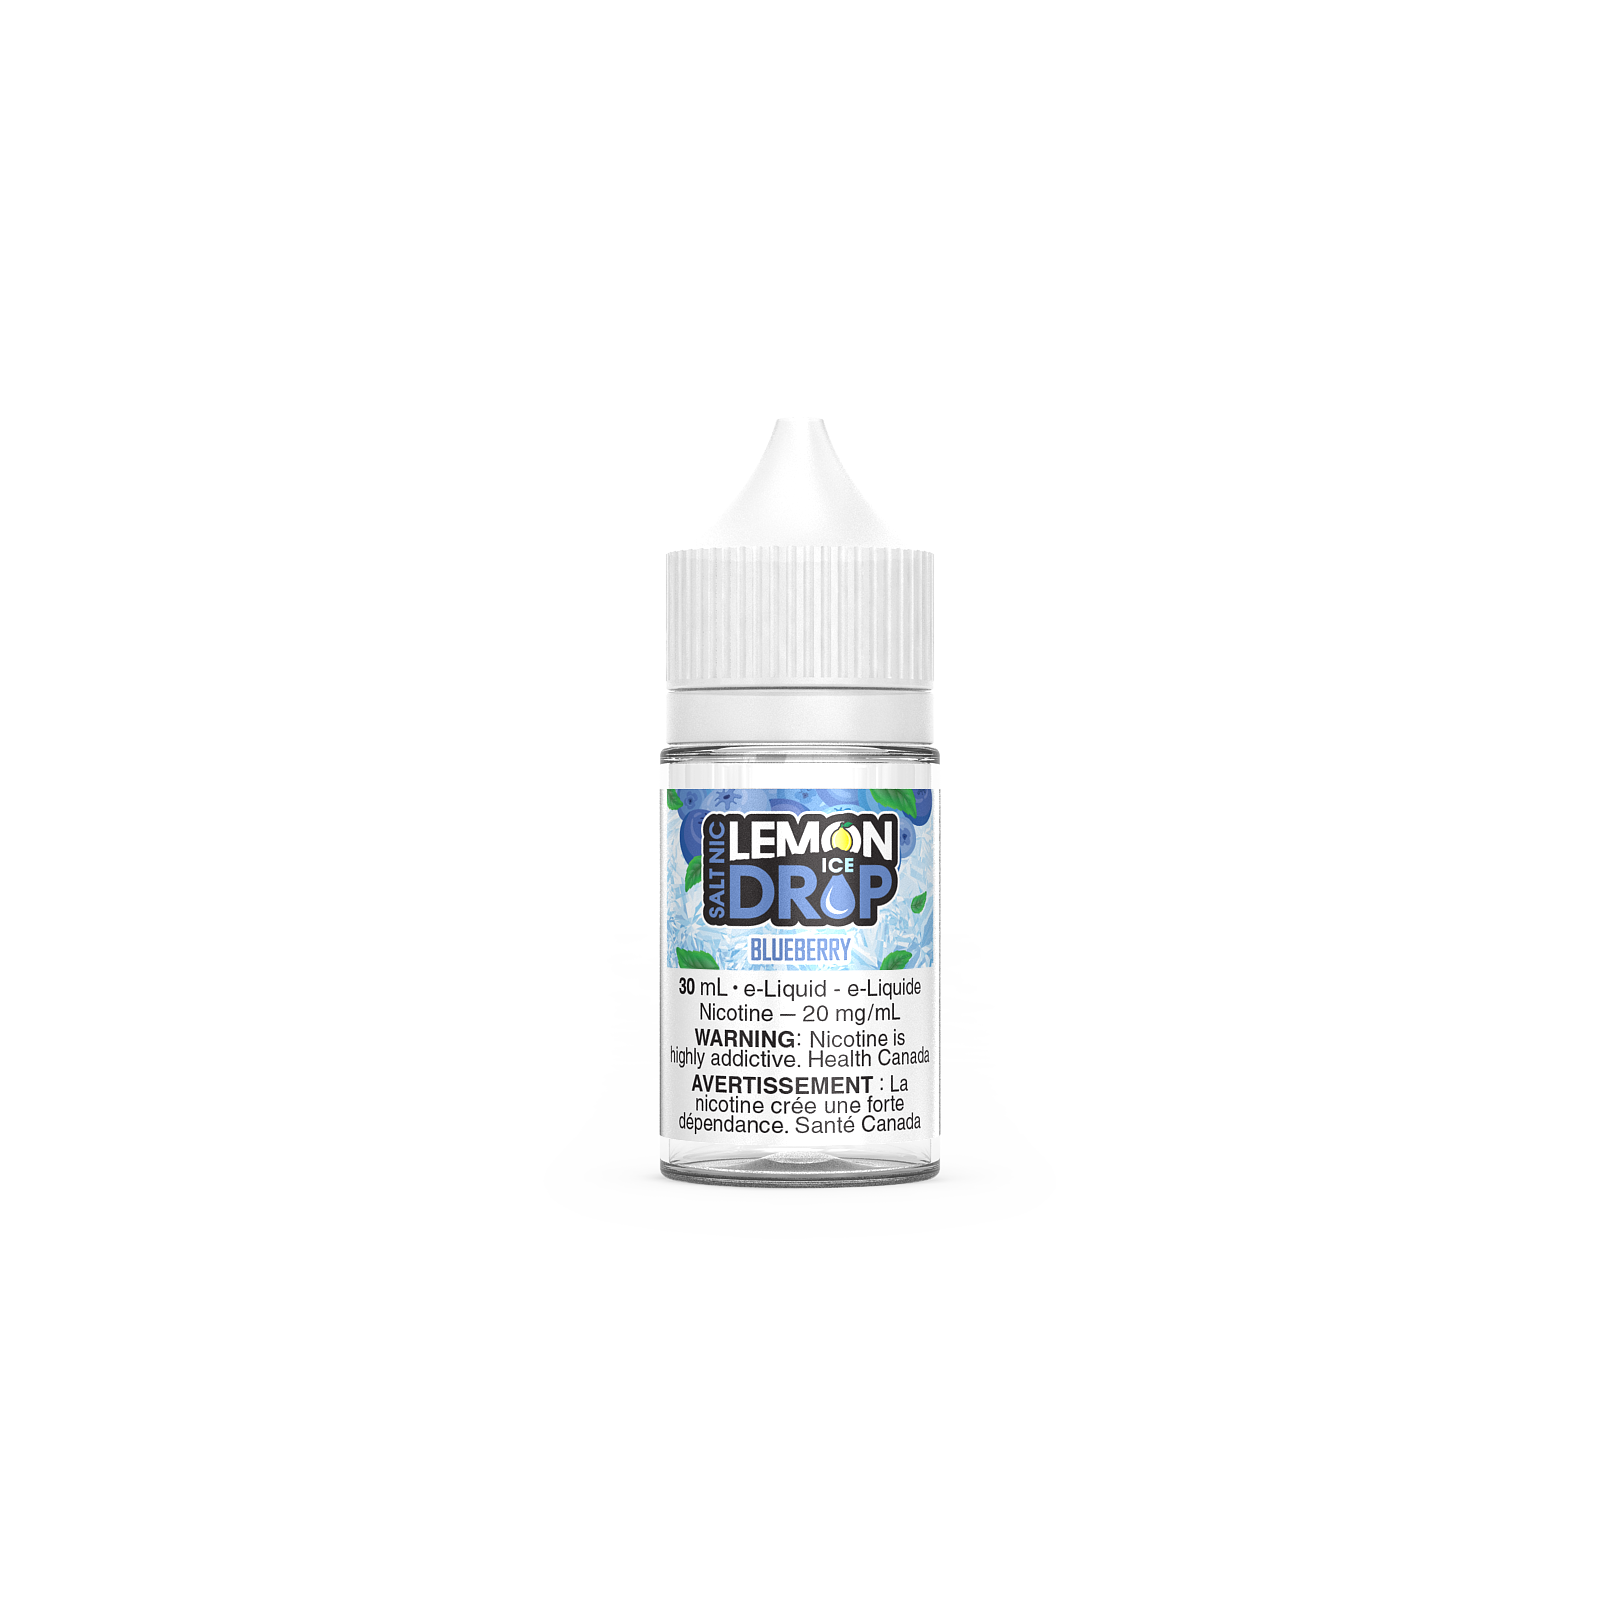 Blueberry - Lemon Drop ICE - SALT - E-Liquid